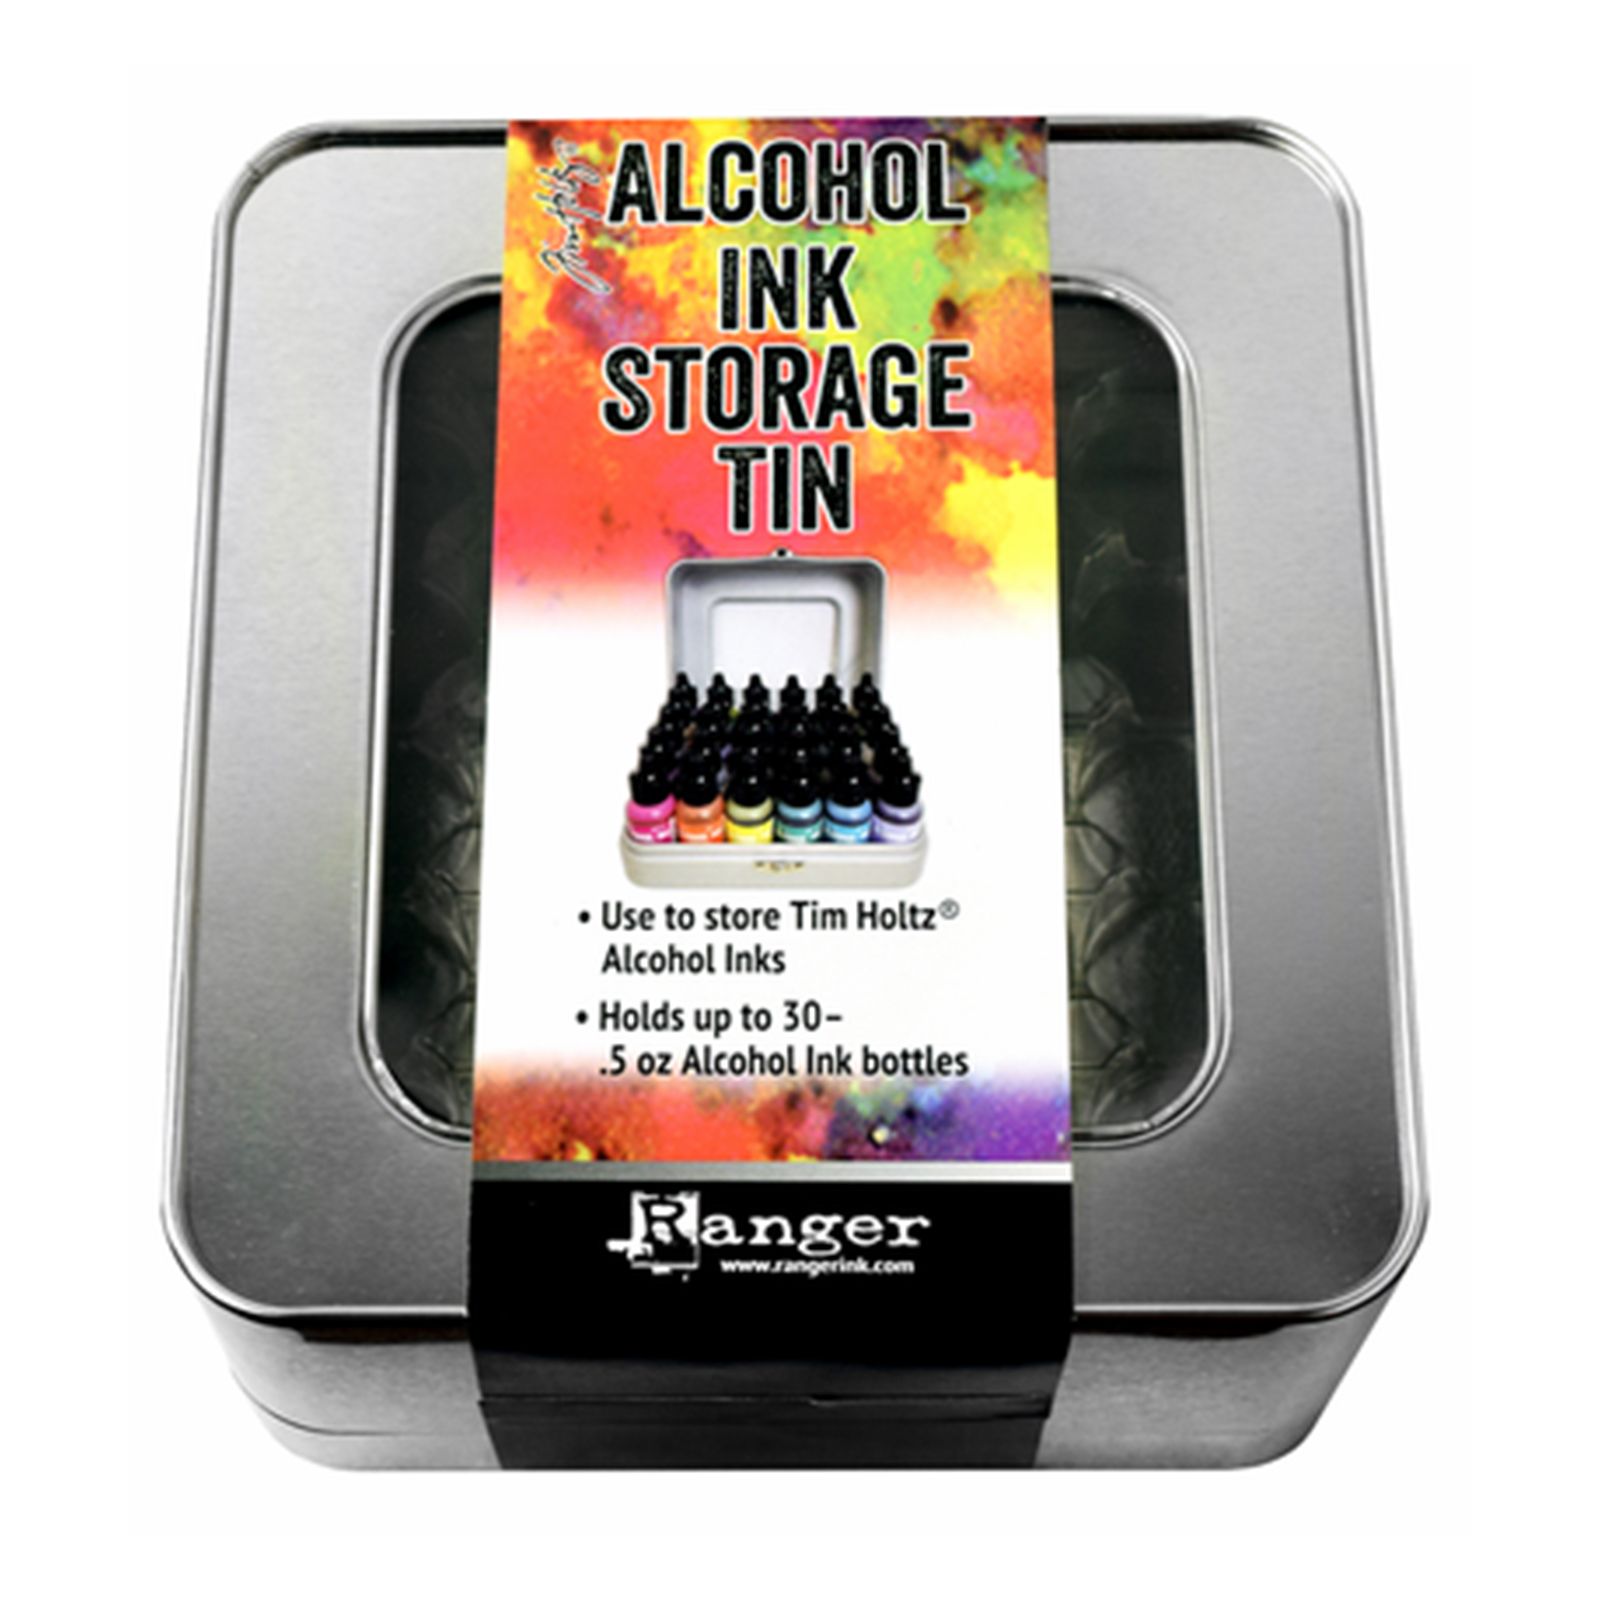 Tim Holtz Alcohol Ink - Storage Tin